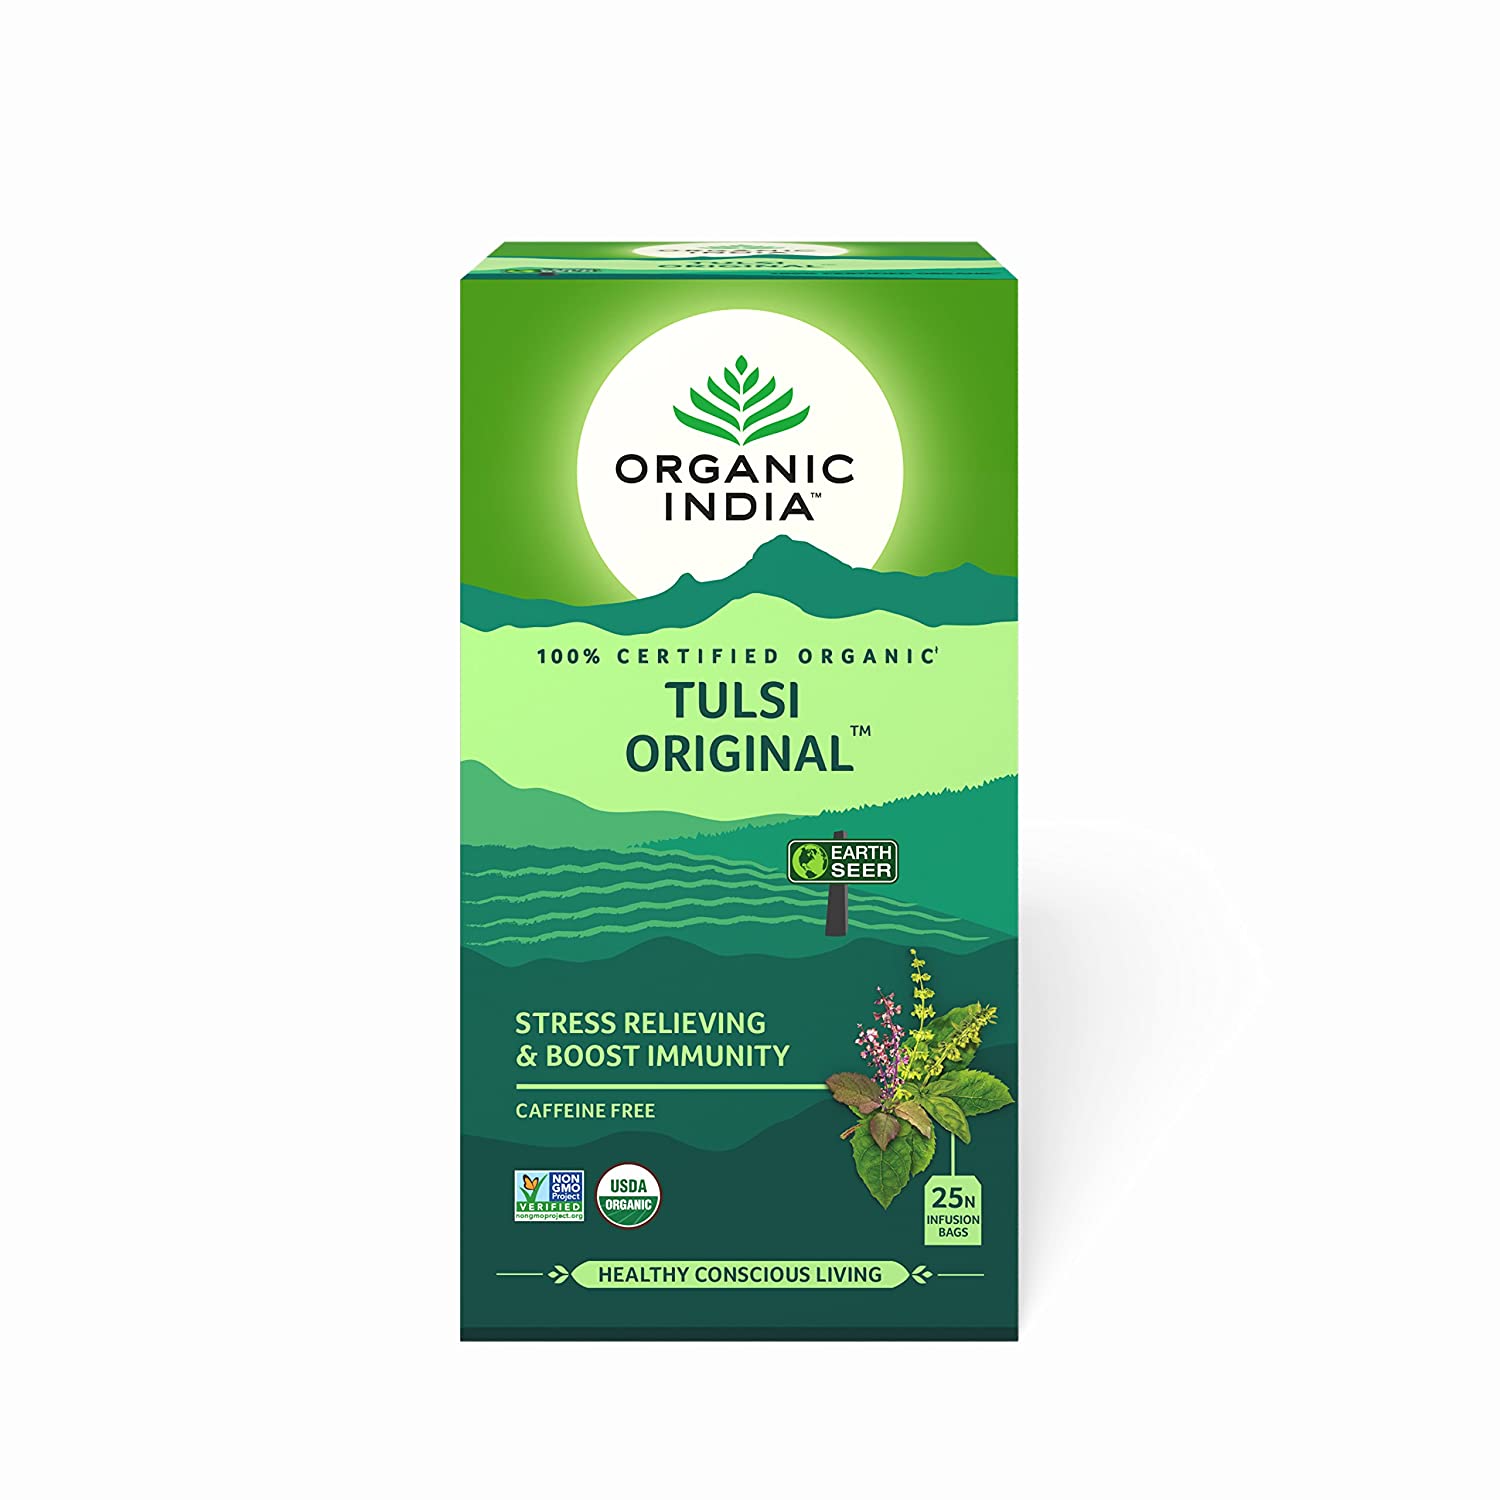 Organic India tulsi original green tea | 25 tea bags